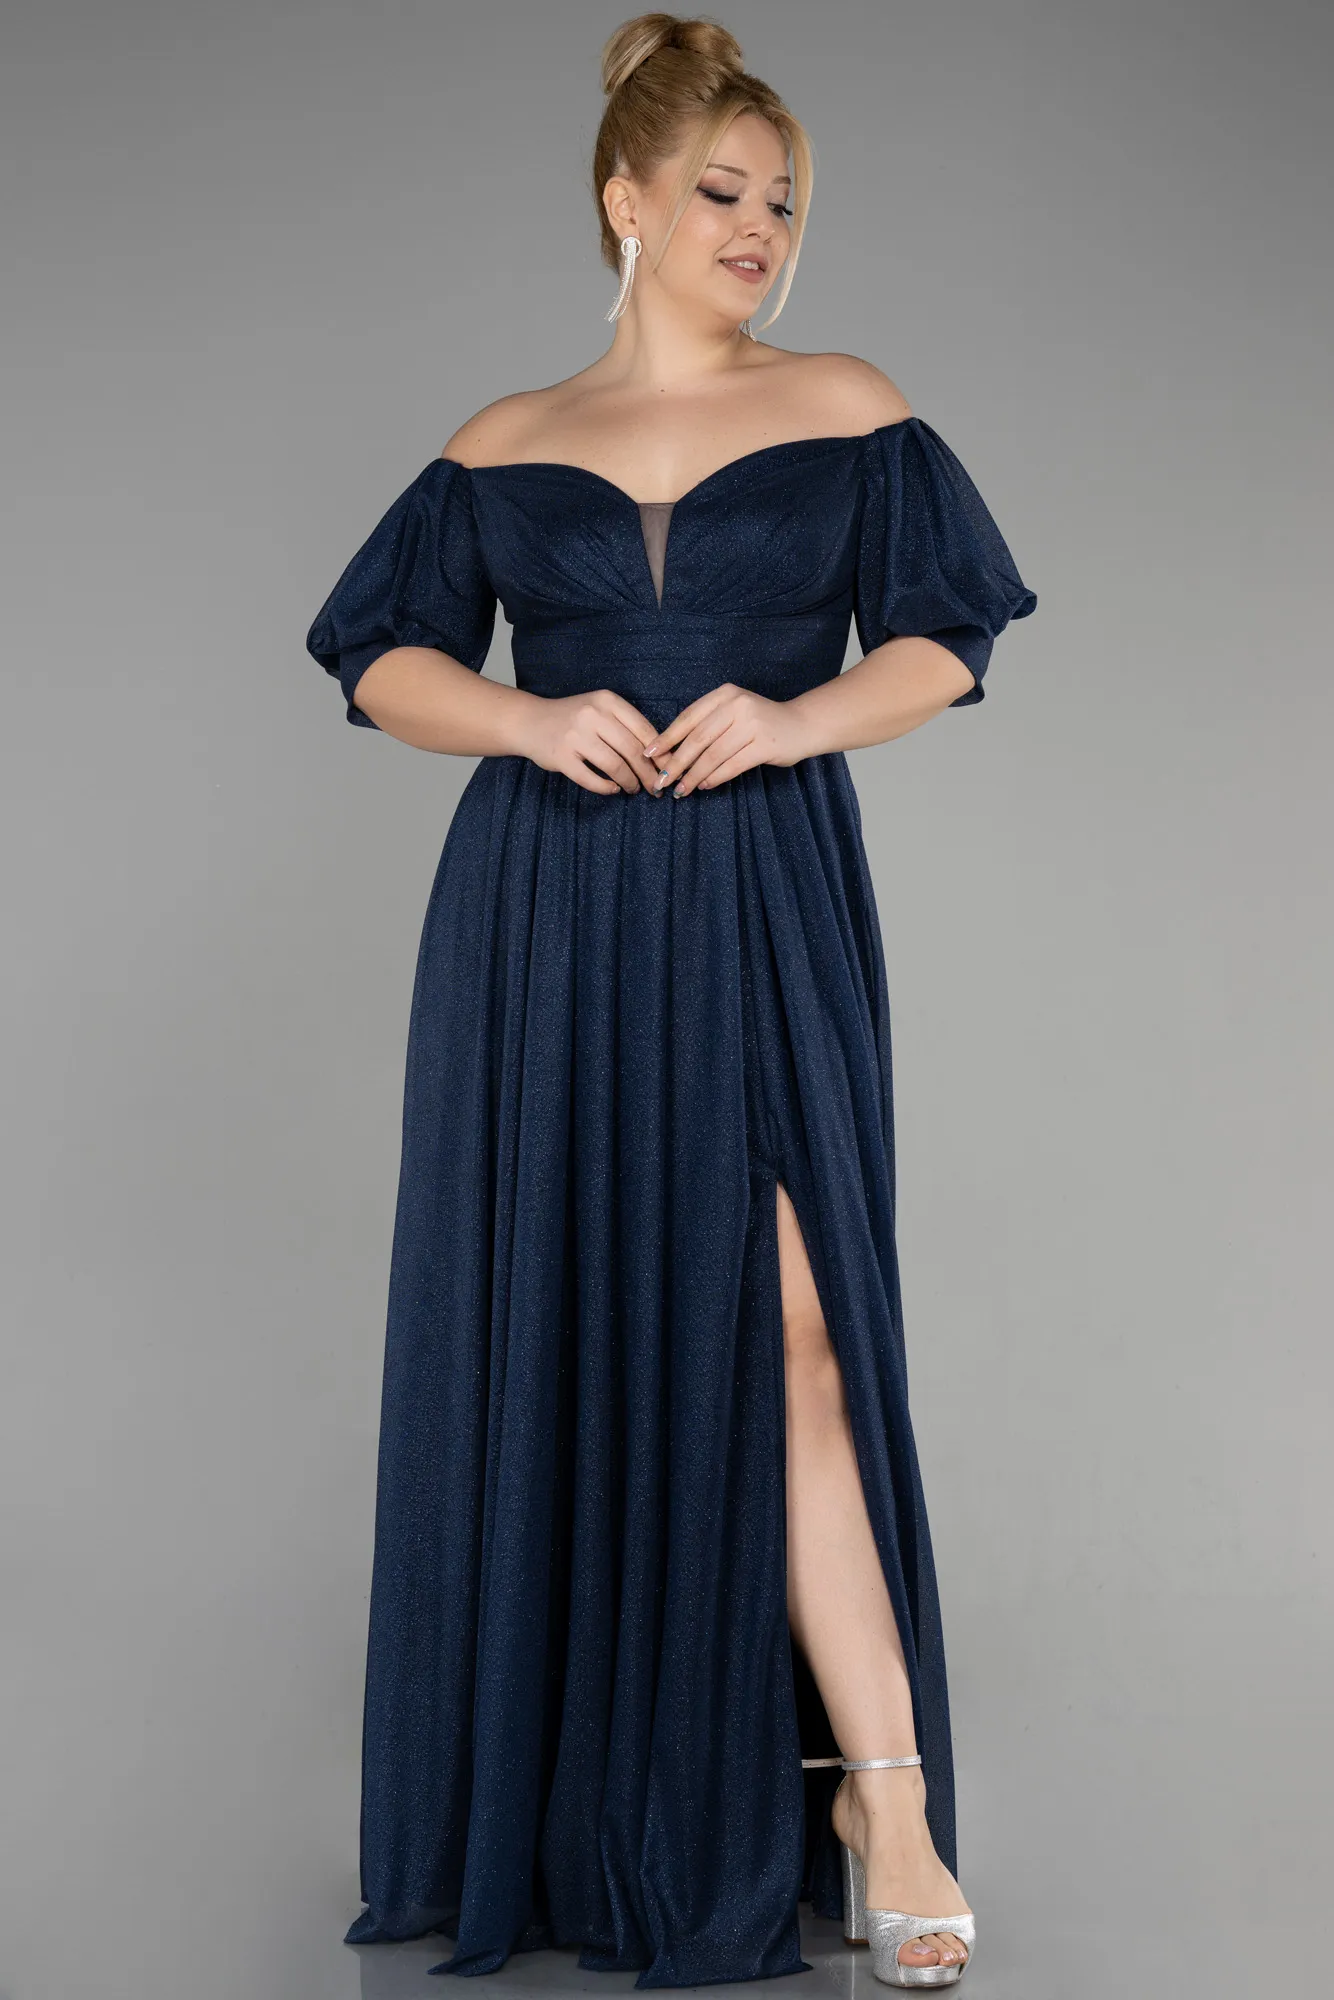 Navy Blue-Long Plus Size Evening Dress ABU3615